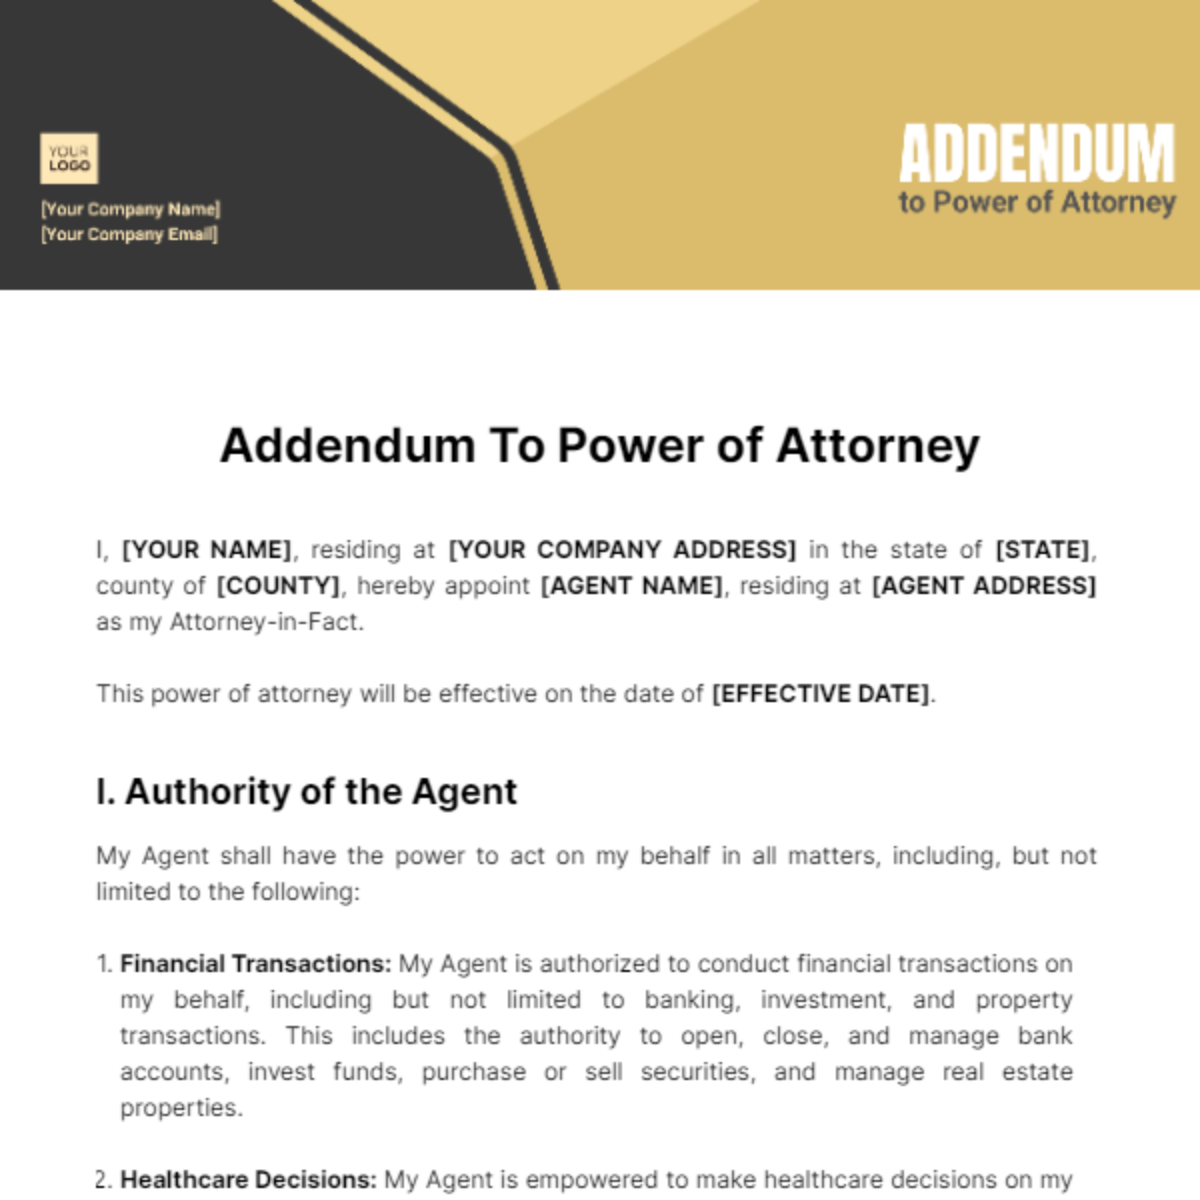 Addendum To Power of Attorney Template